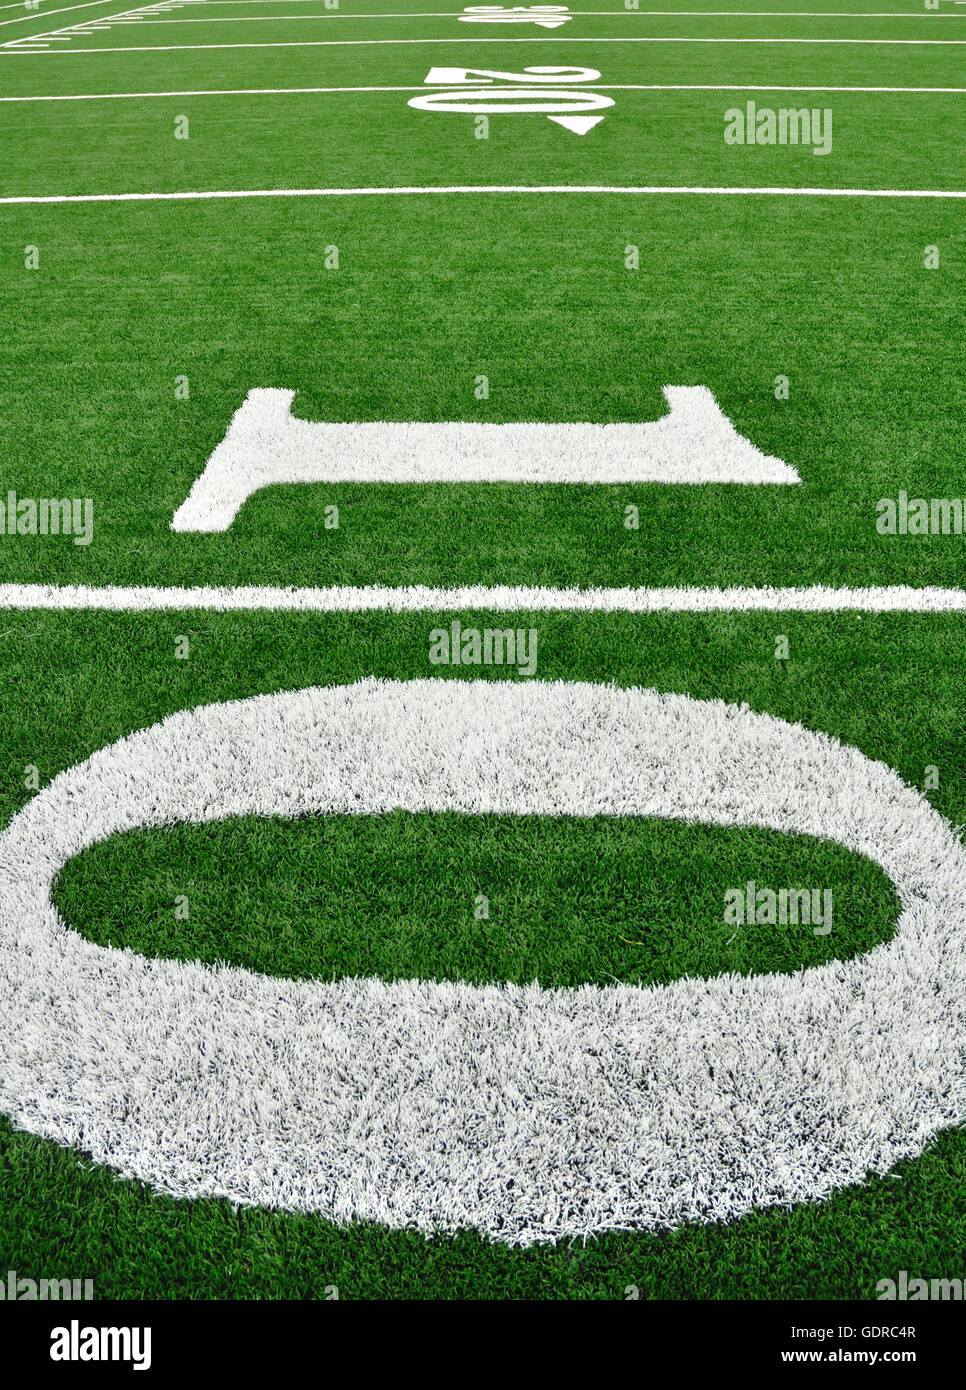 10, 20 & 30-Yard-Linie auf American-Football-Feld Stockfoto